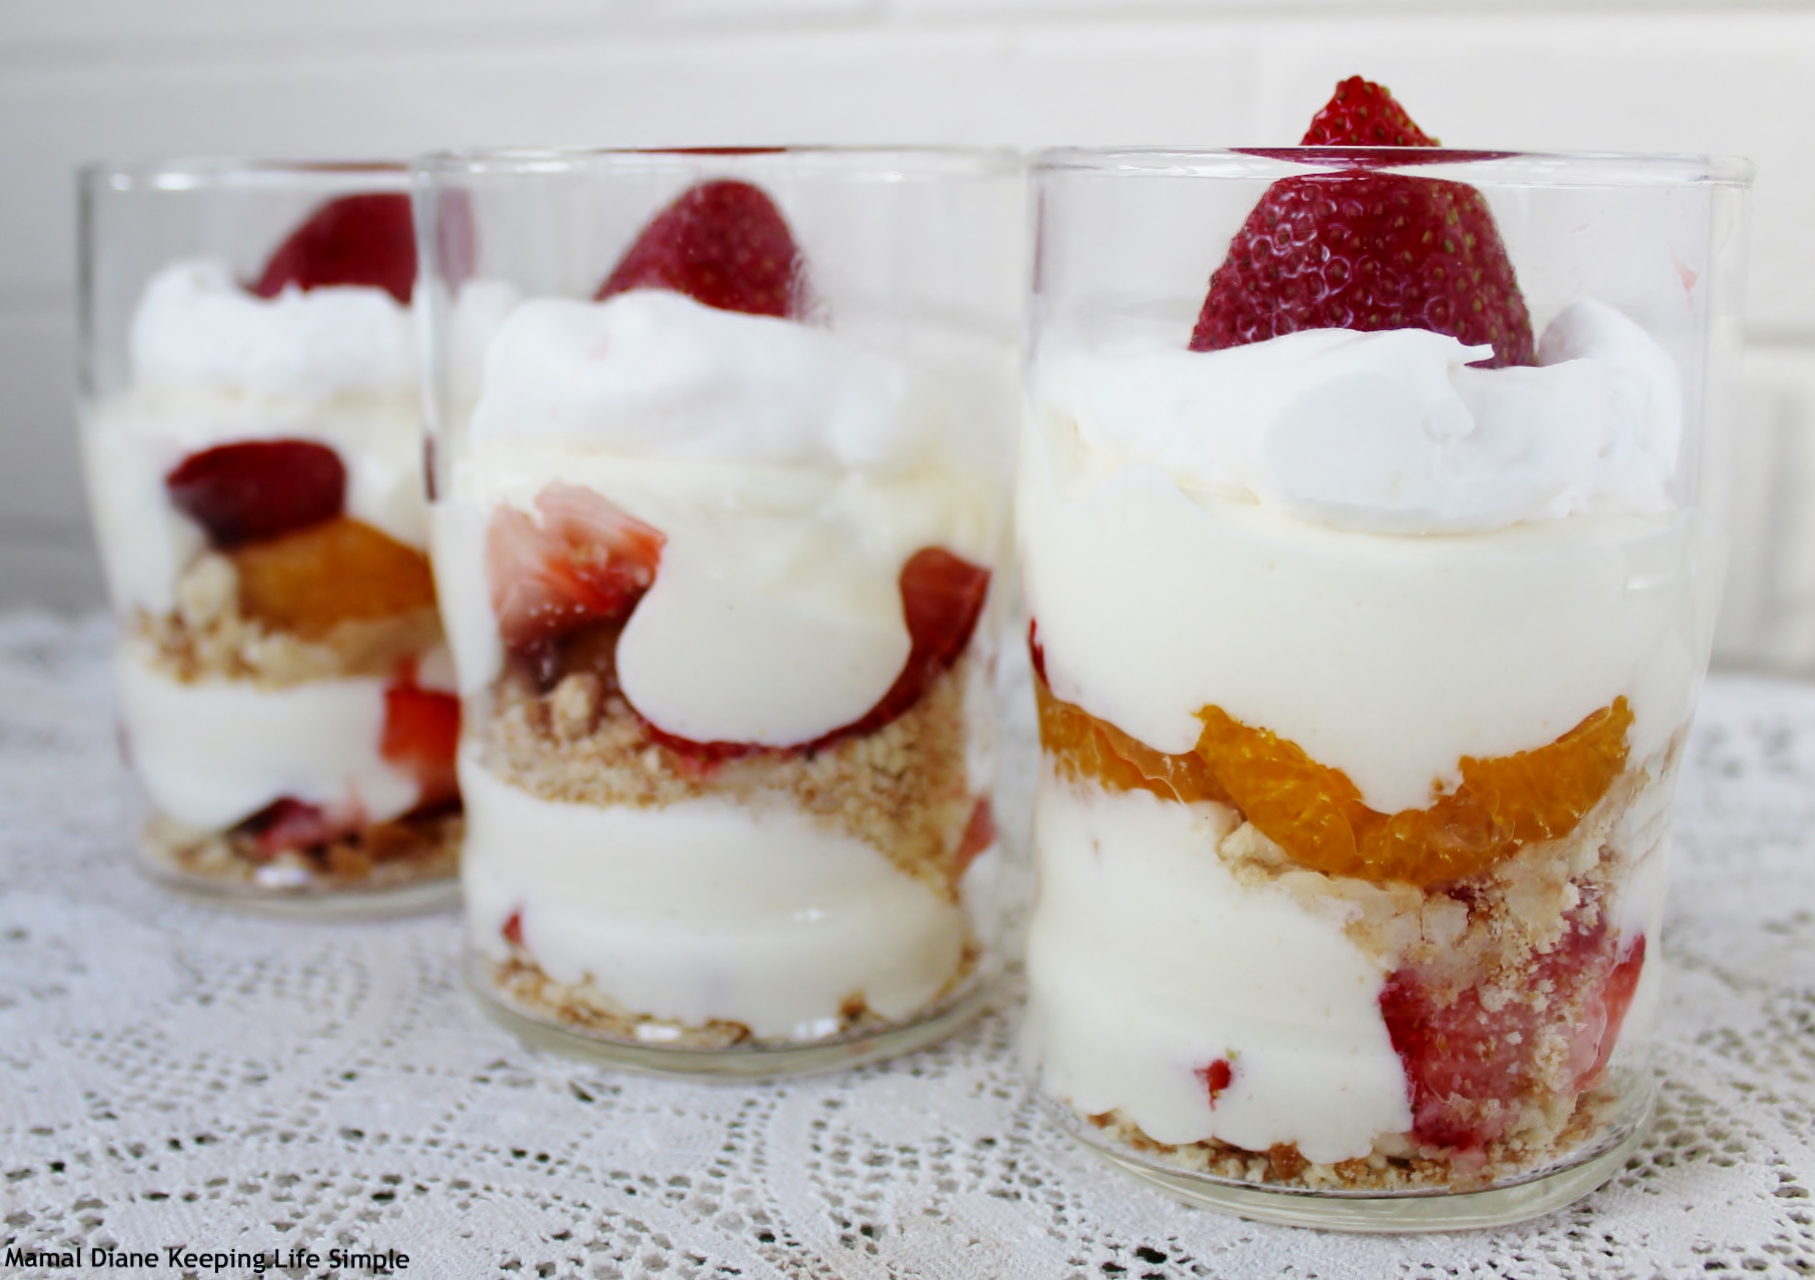 Simple Strawberry Cheesecake Parfait – Mamal Diane